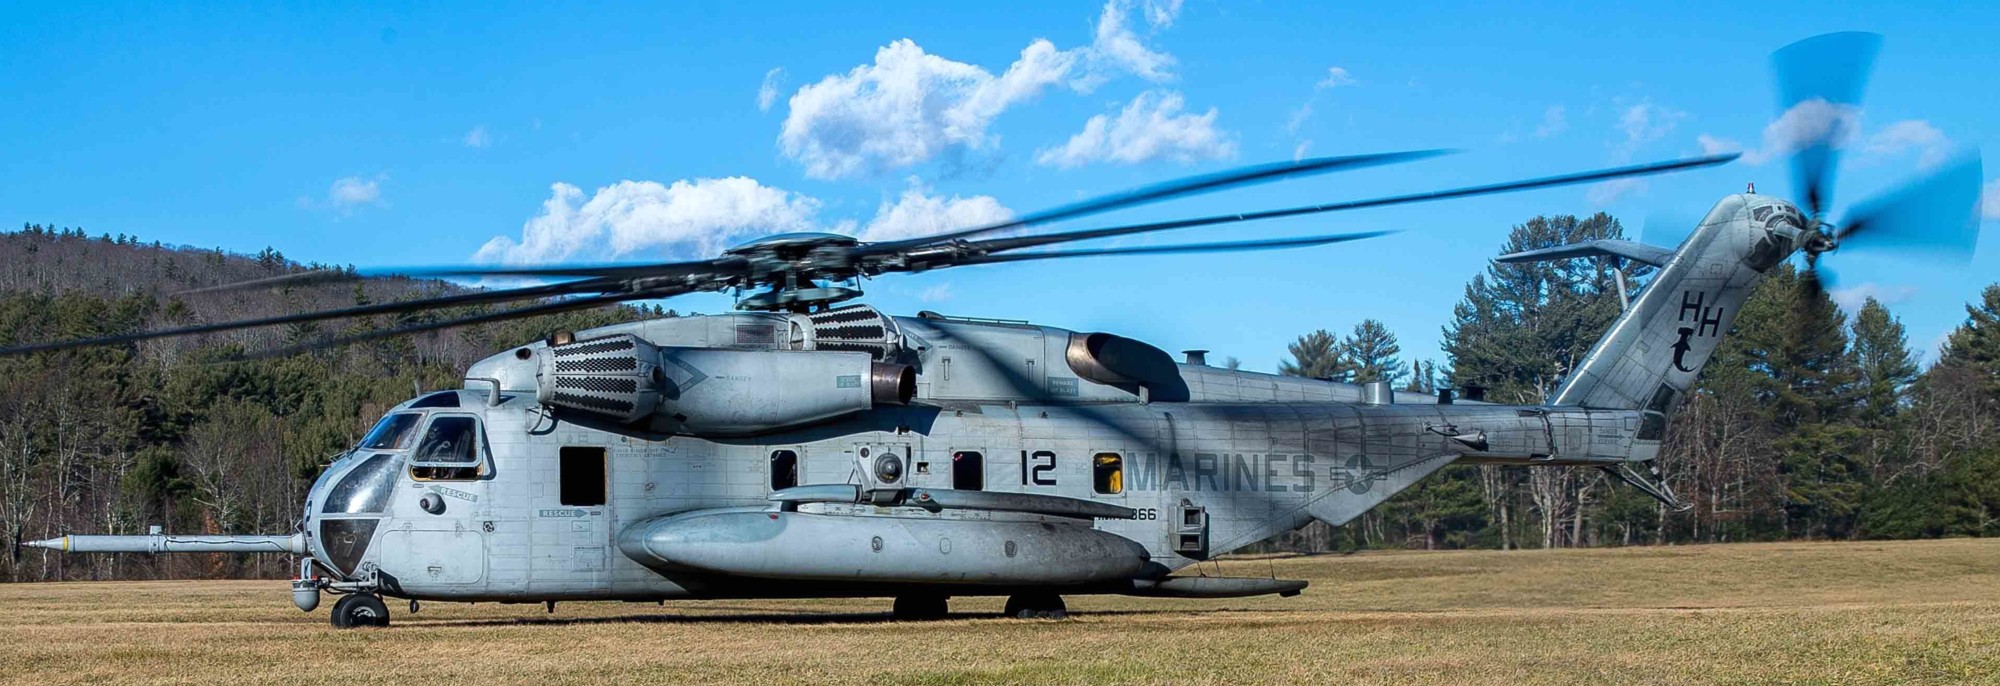 hmh-366 hammerheads ch-53e super stallion marine heavy helicopter squadron usmc brunswick maine 150